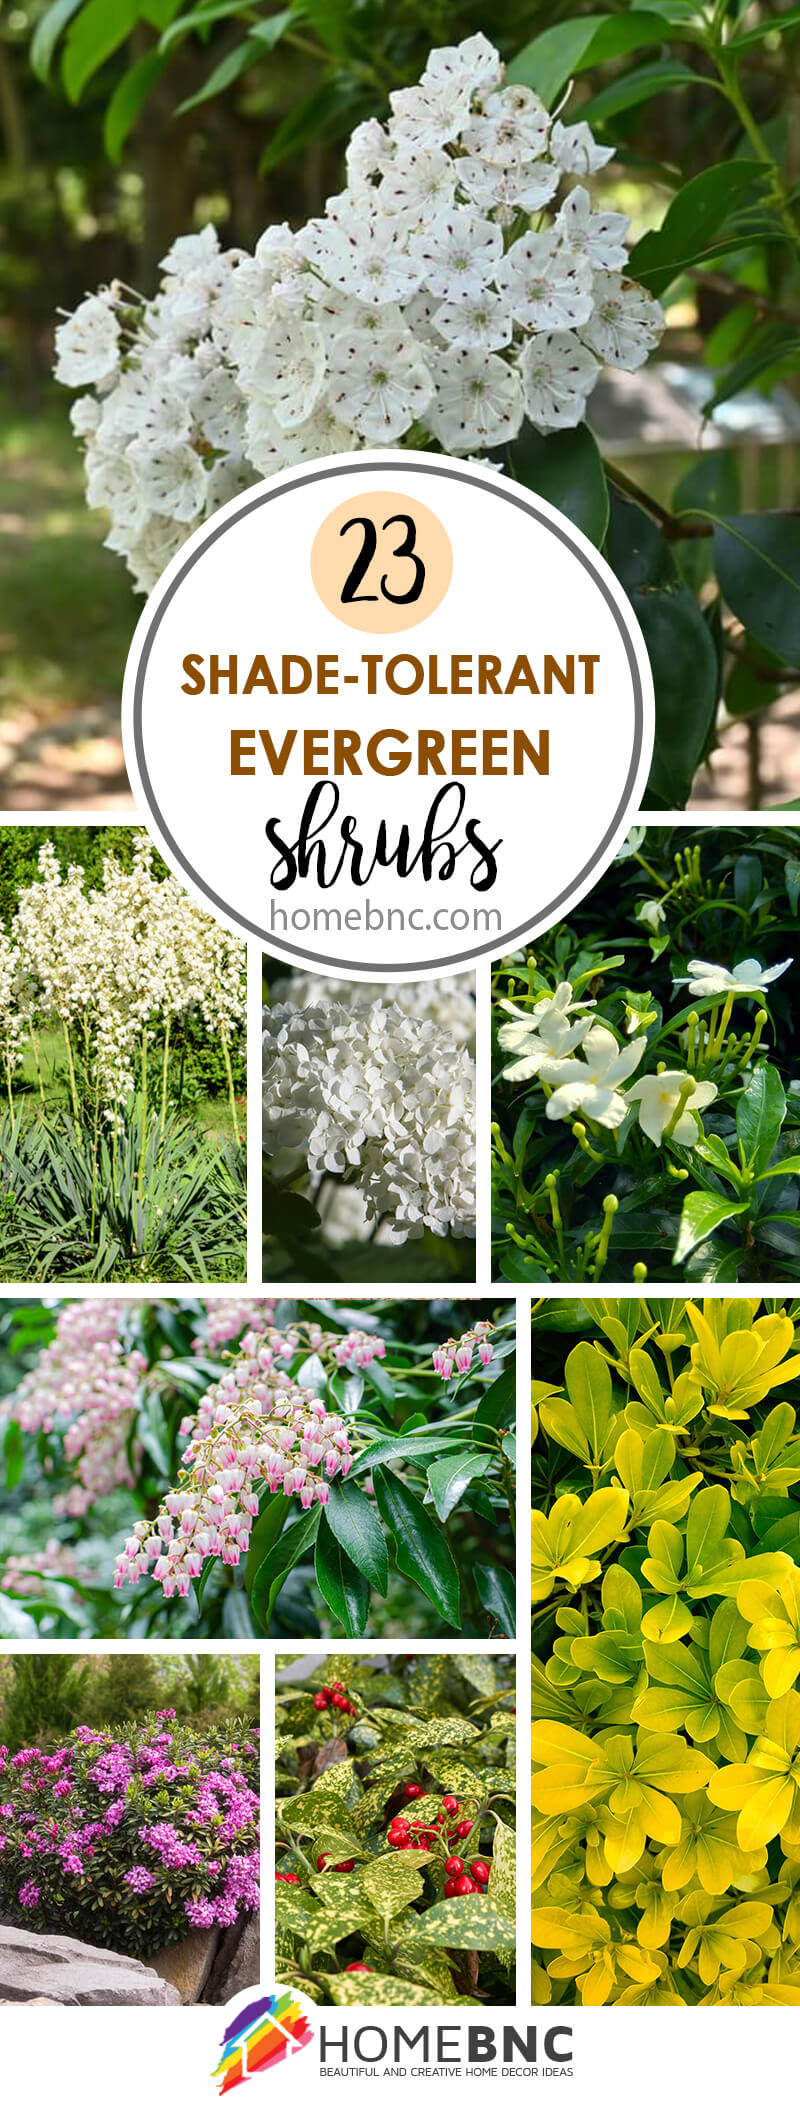 Shade tolerant evergreen shrubs